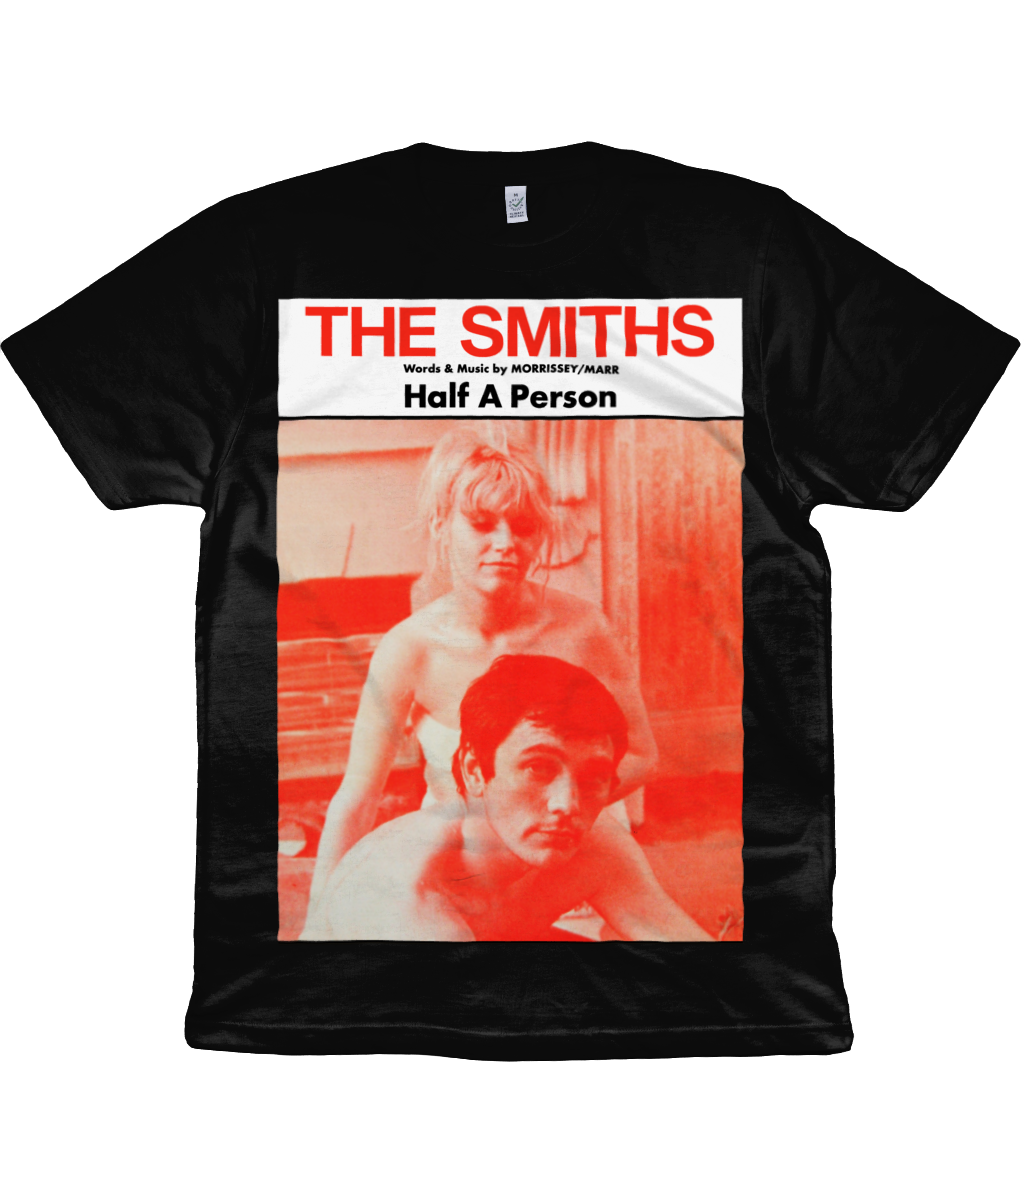 THE SMITHS - Half A Person - 1987